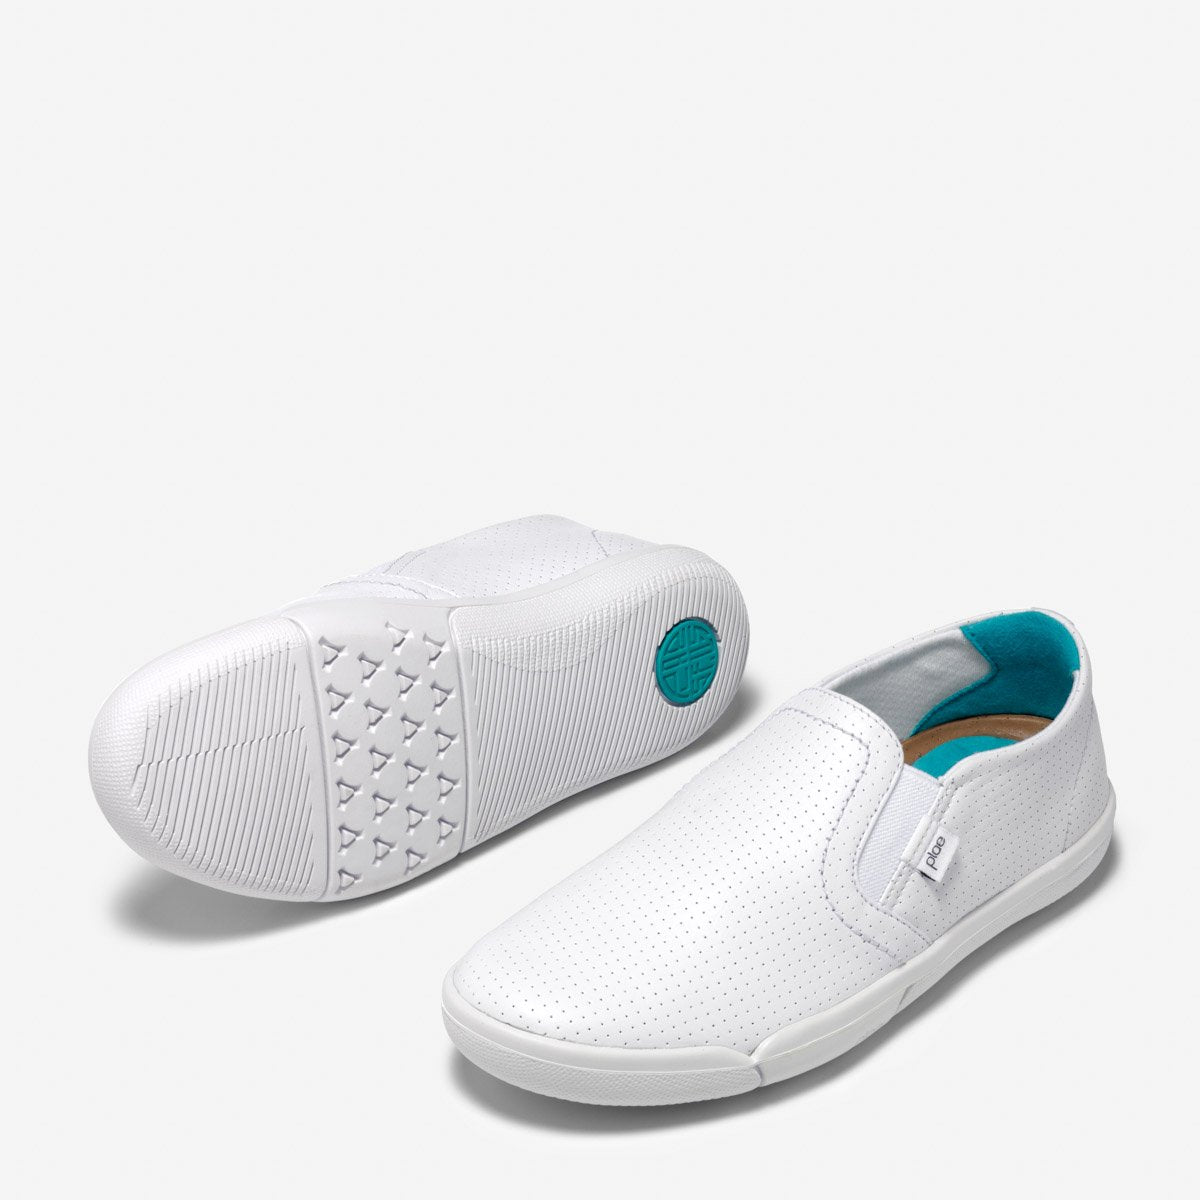 Marten White Cap - PLAE Sneakers